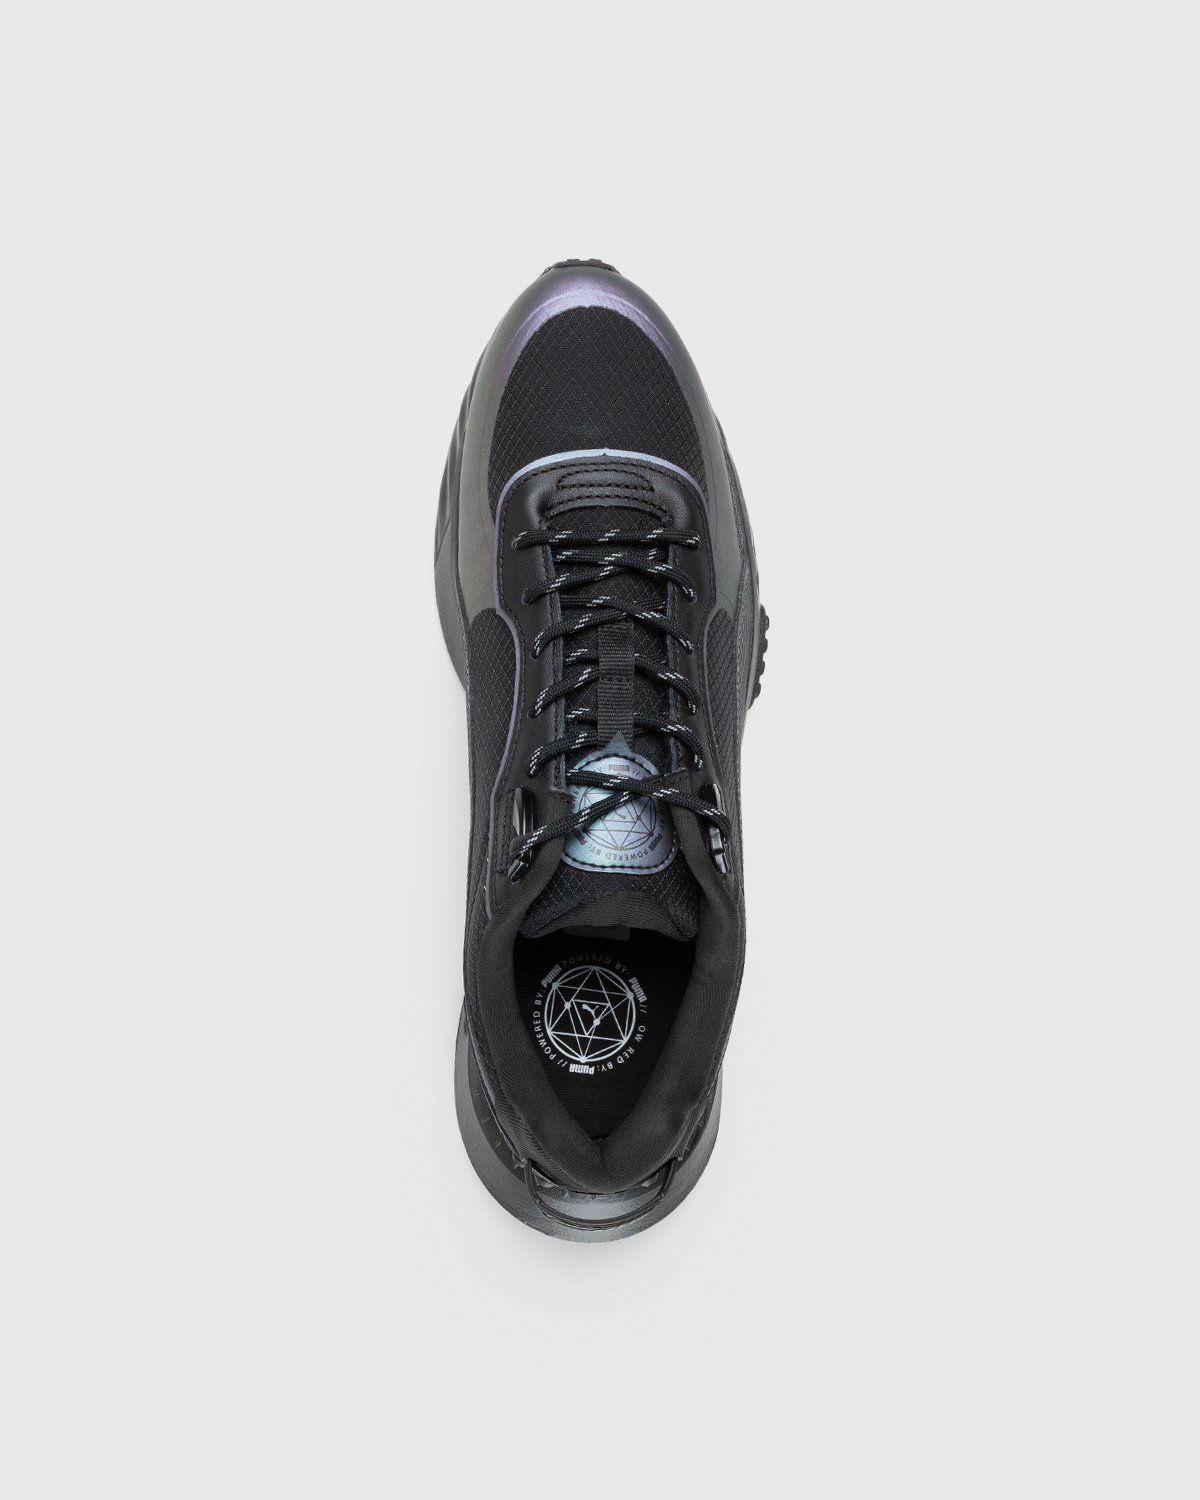 Puma – Wild Rider Grip LS Black - Low Top Sneakers - Black - Image 5